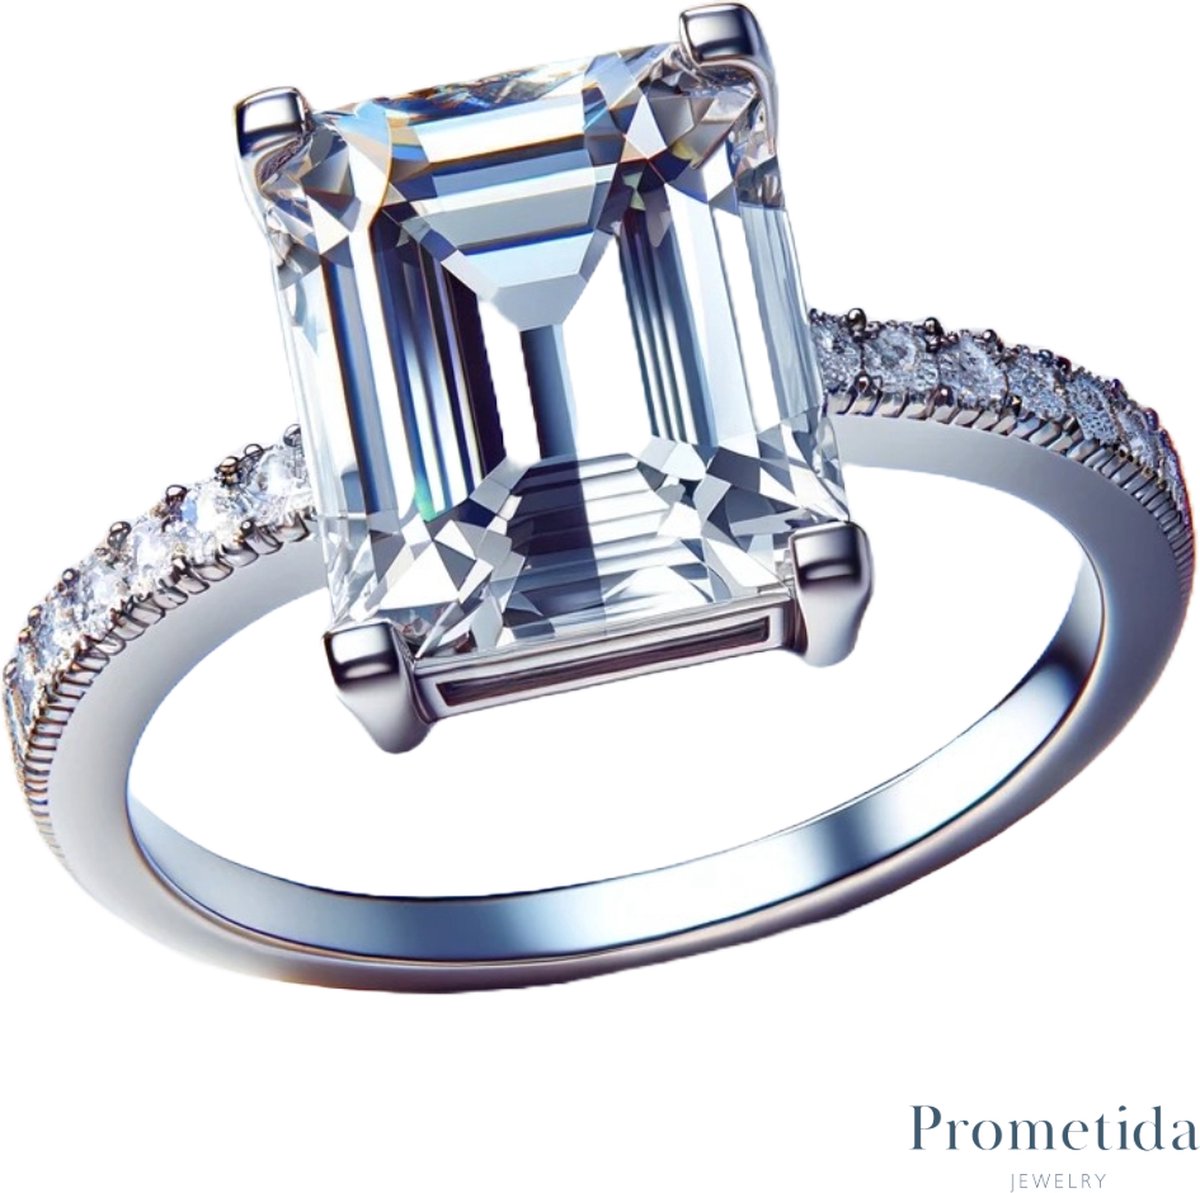 Prometida - Verlovingsring - Ringenset - Ring Dames - Emerald-cut Solitair pavé - Zirkonia steen - Sterling Zilver 925 - Aanschuifring pavé in v-vorm - Uitgesproken ring